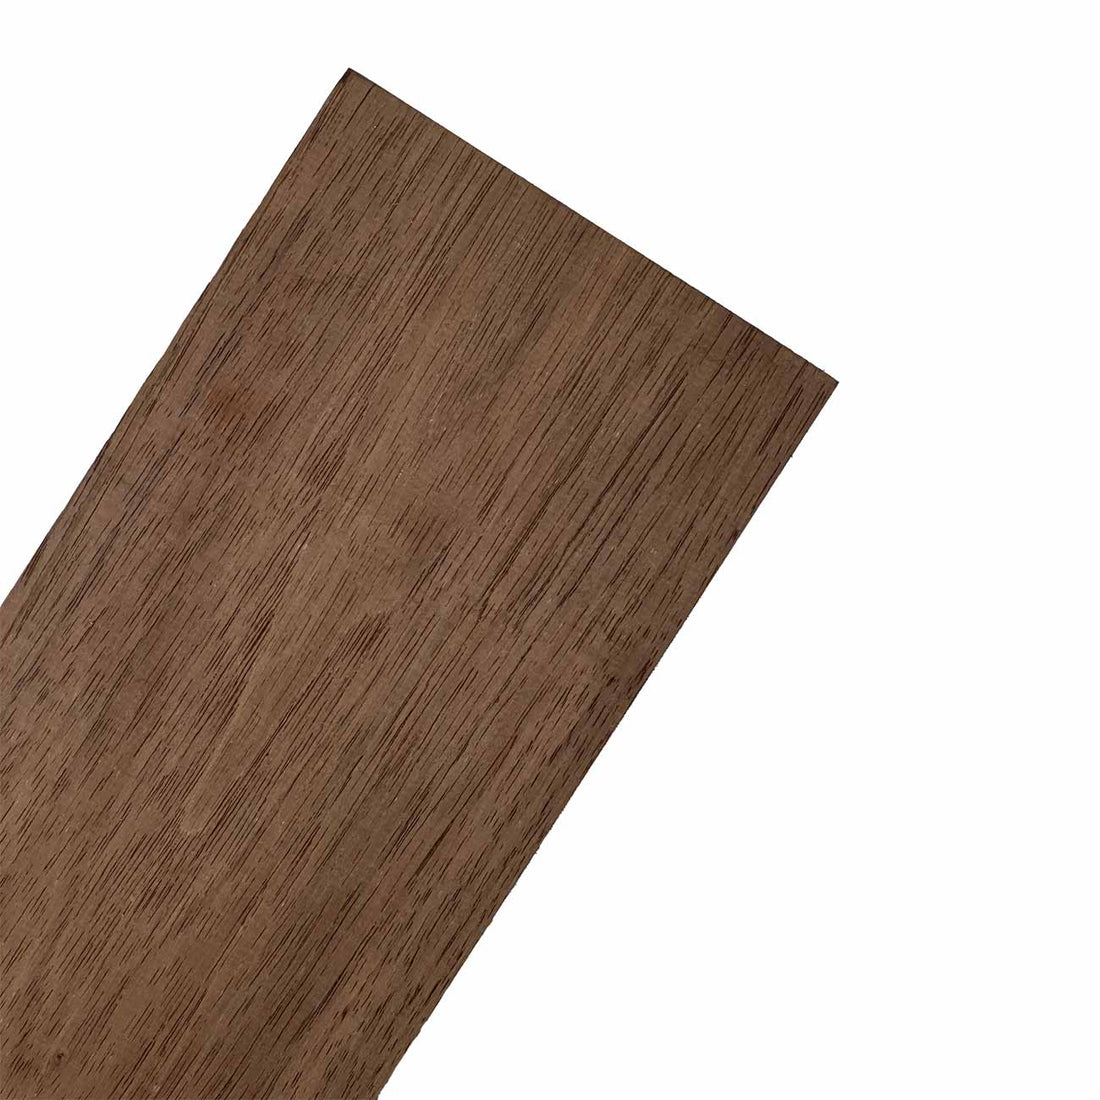 Peruvian Walnut Thin Stock Lumber Boards Wood Crafts - Exotic Wood Zone - Buy online Across USA 